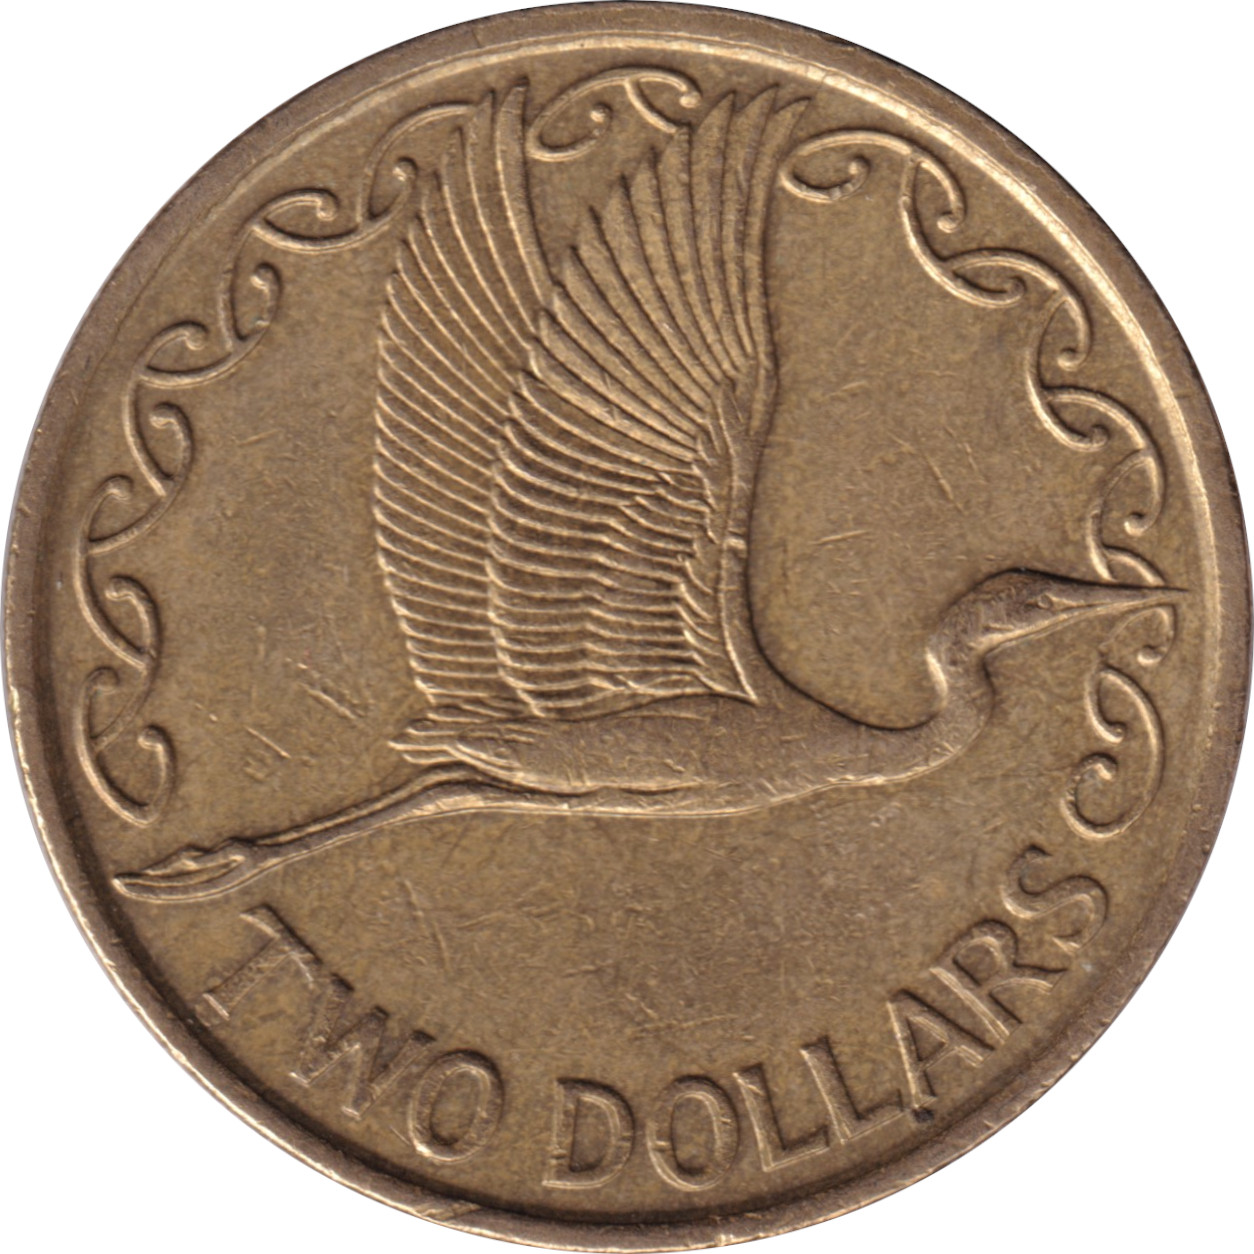 2 dollars - Elizabeth II - Tête mature